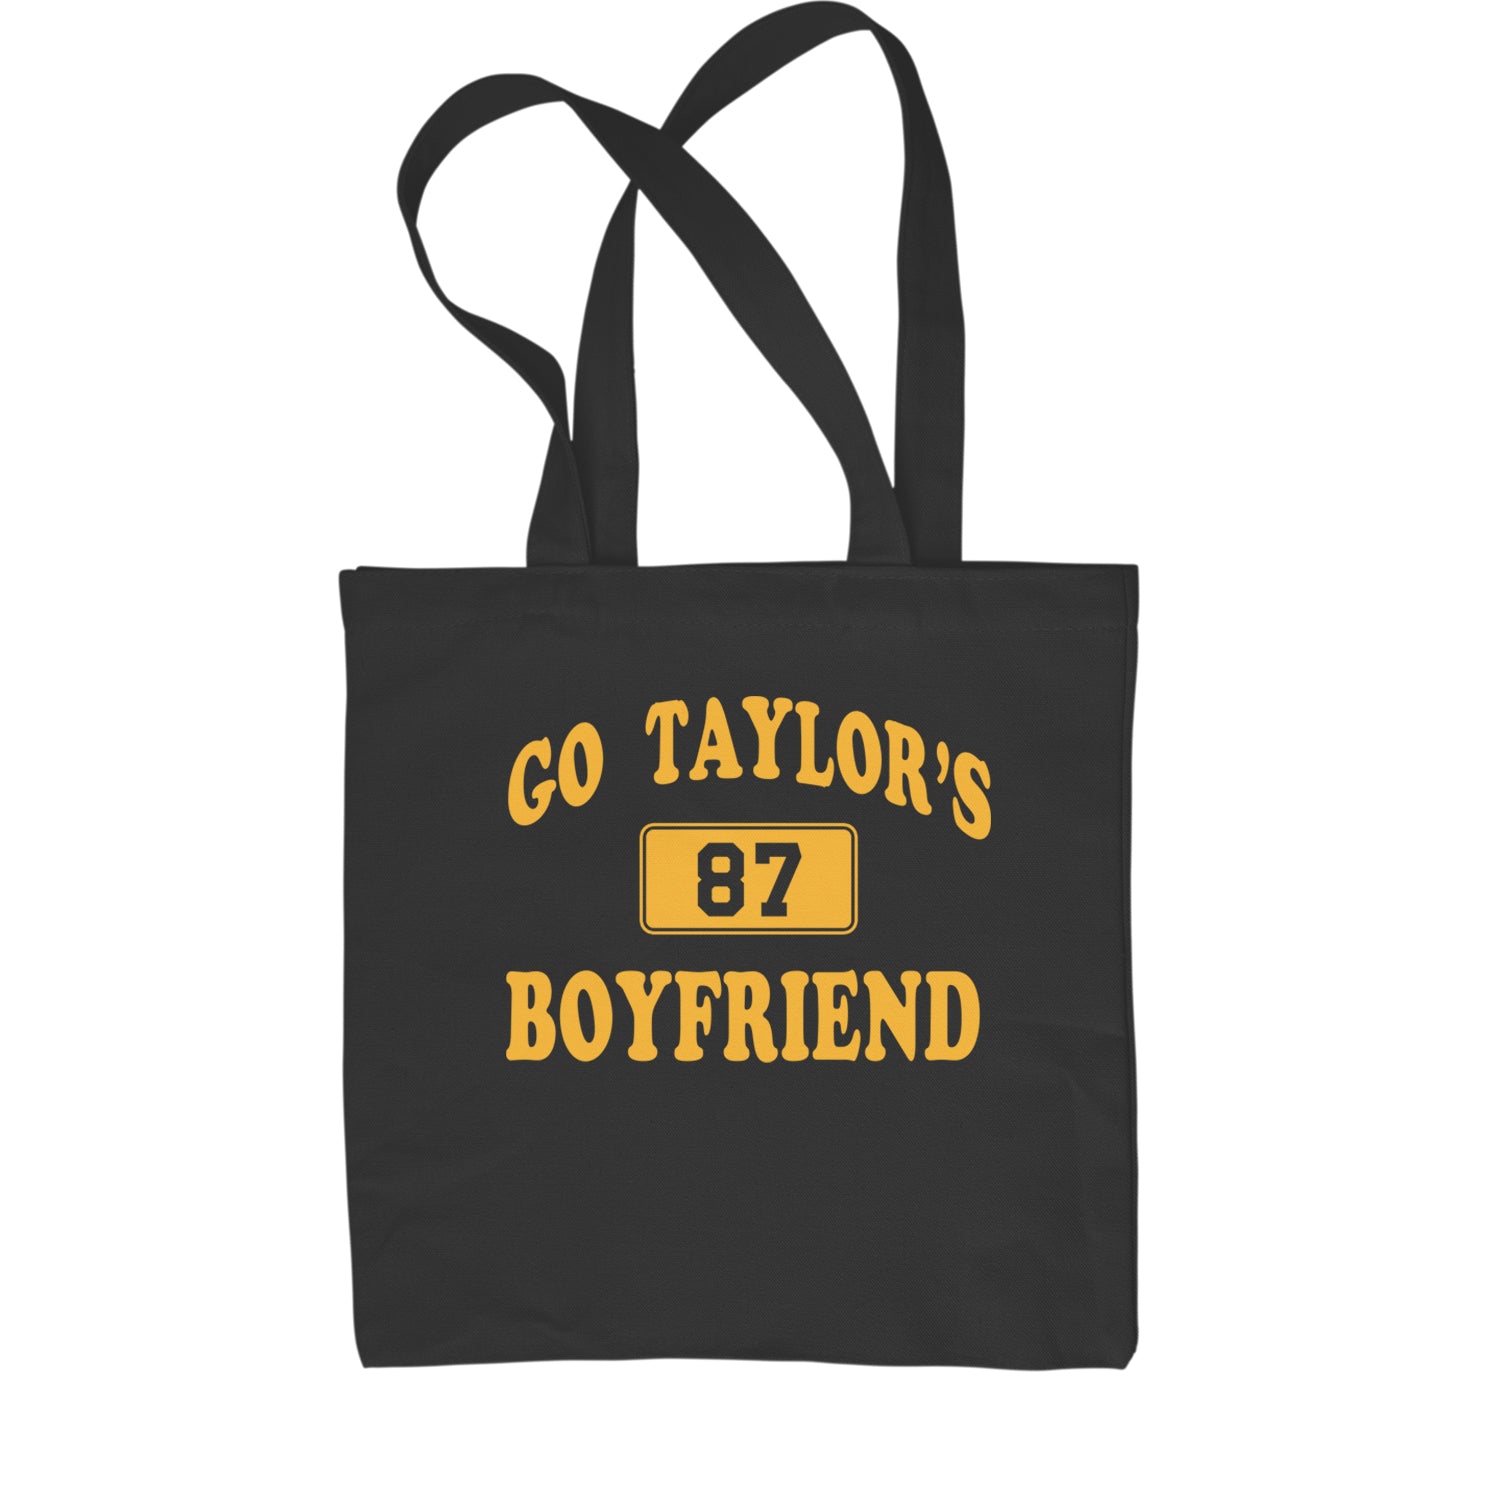 Go Taylor's Boyfriend Kansas City Shopping Tote Bag